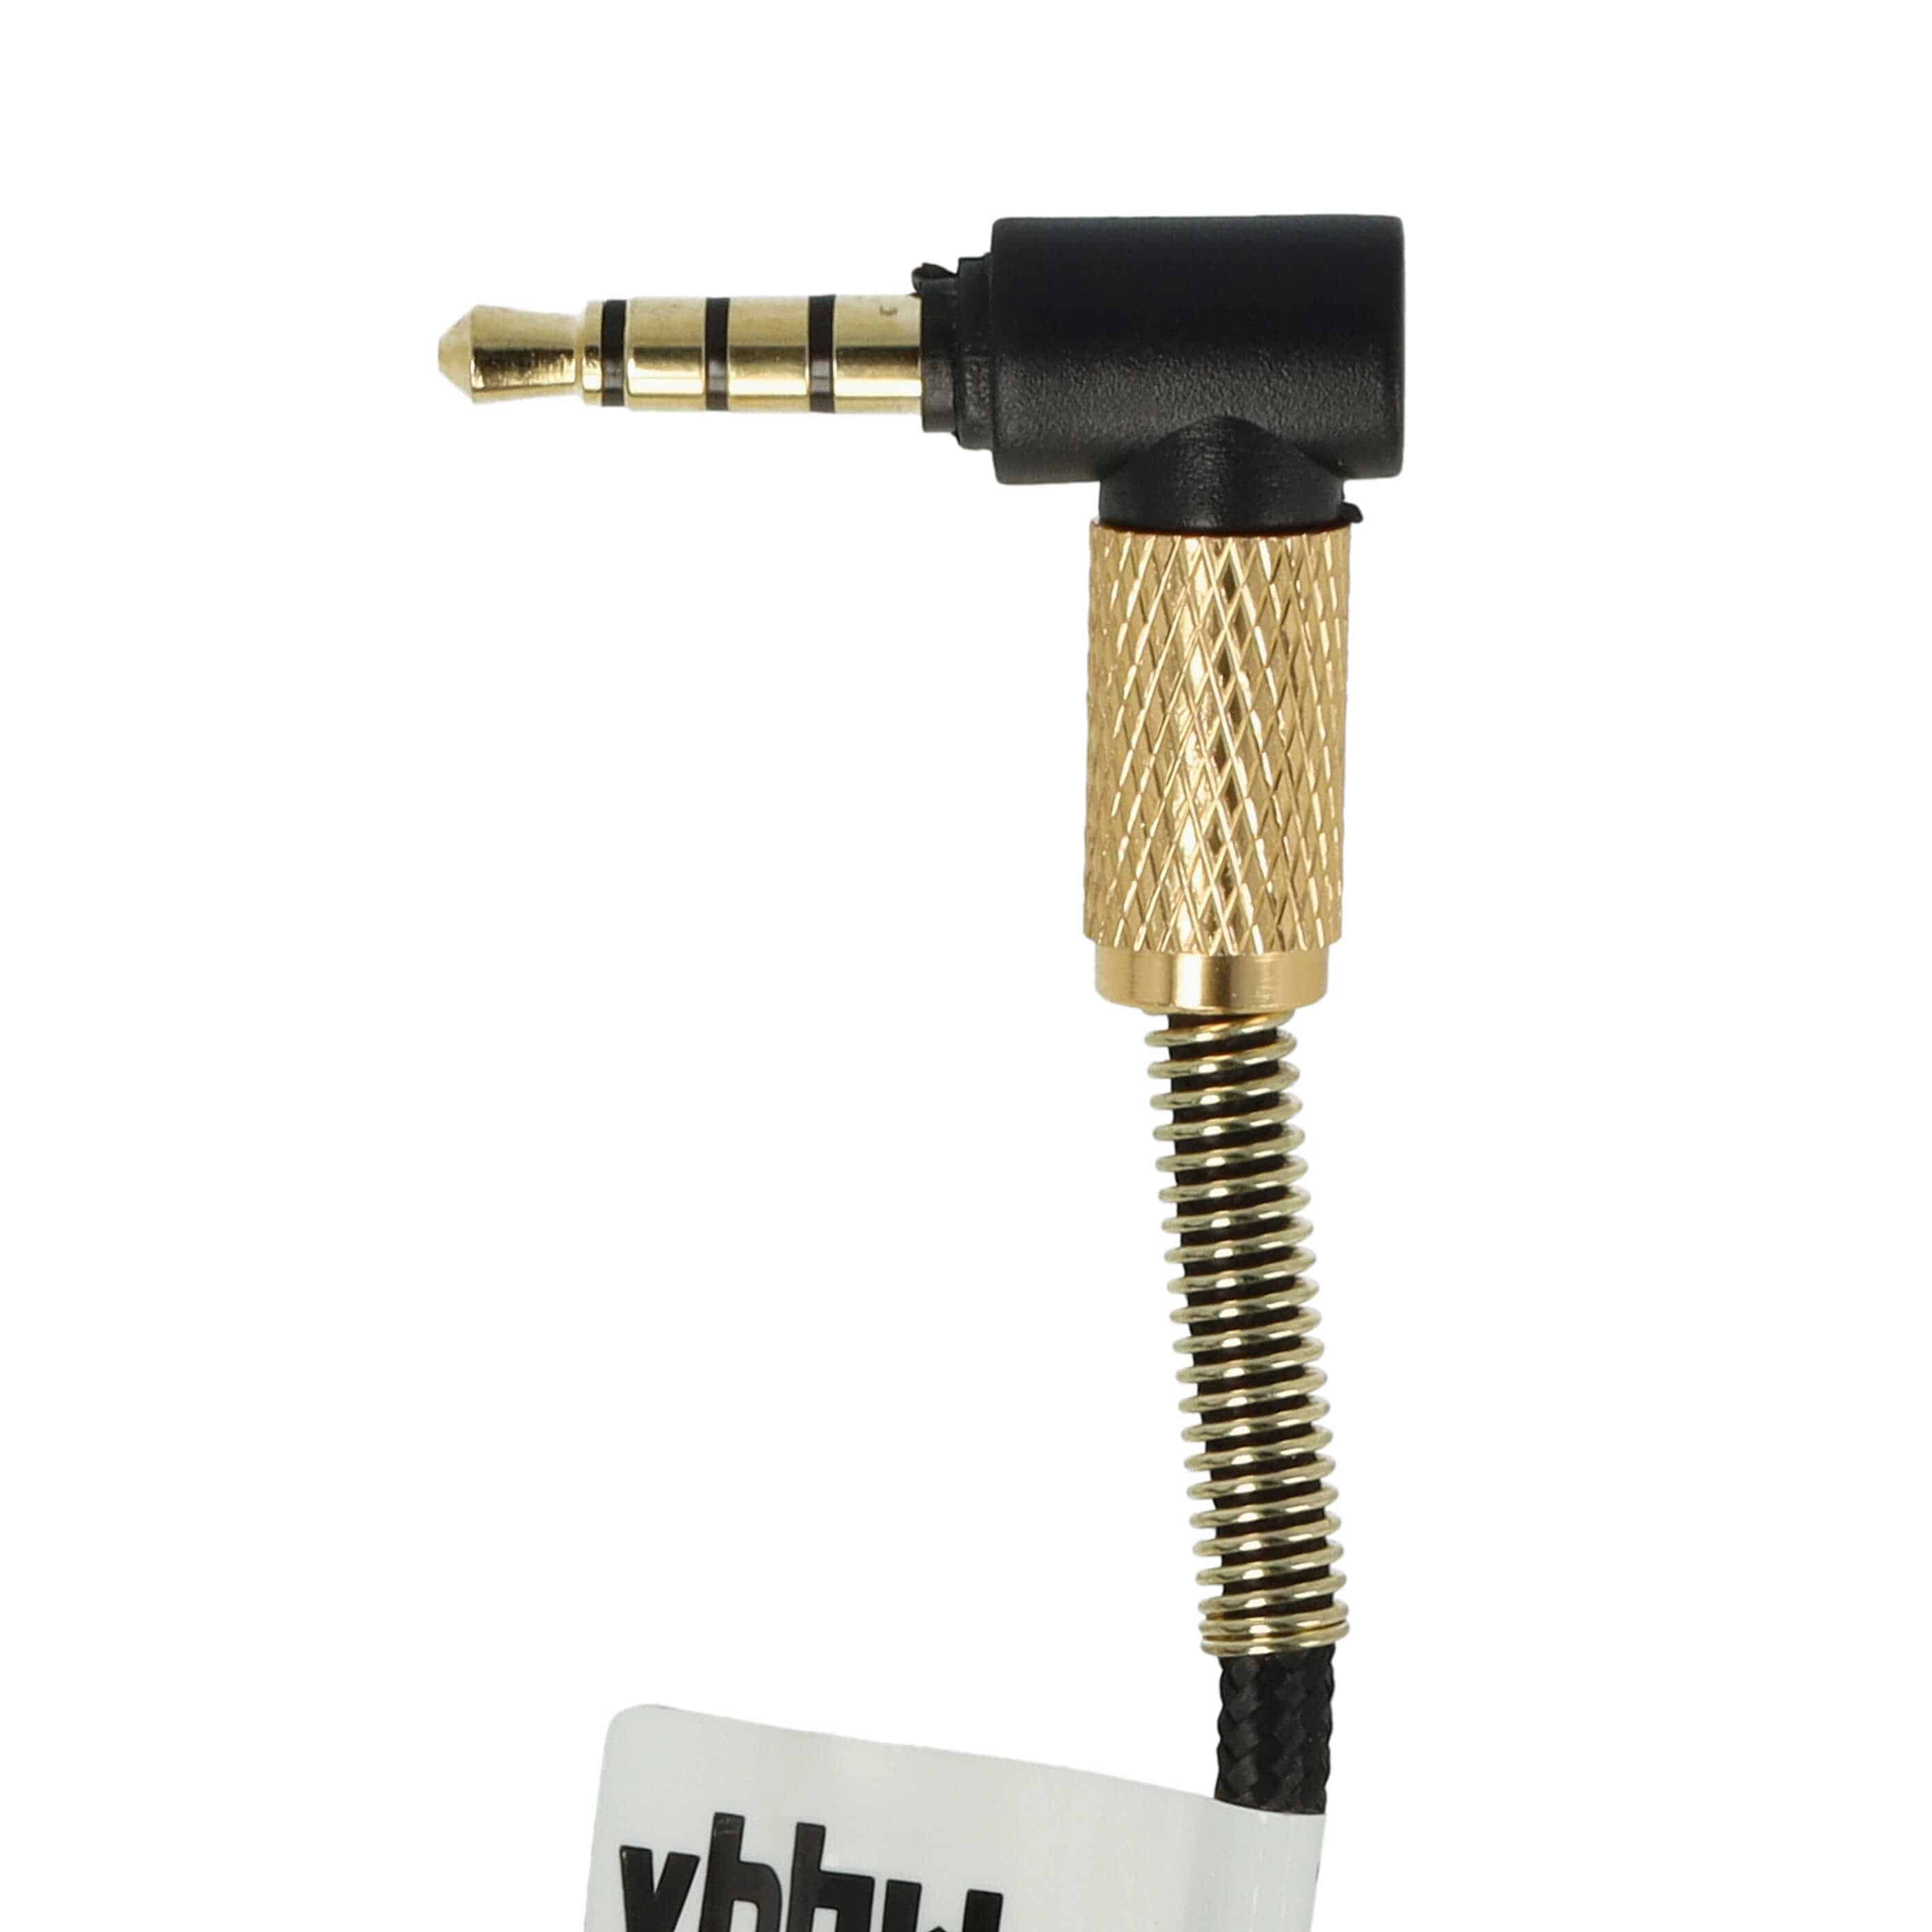 Kabel do słuchawek Sennheiser Momentum 2.0 HD350BT - czarny, 140 cm